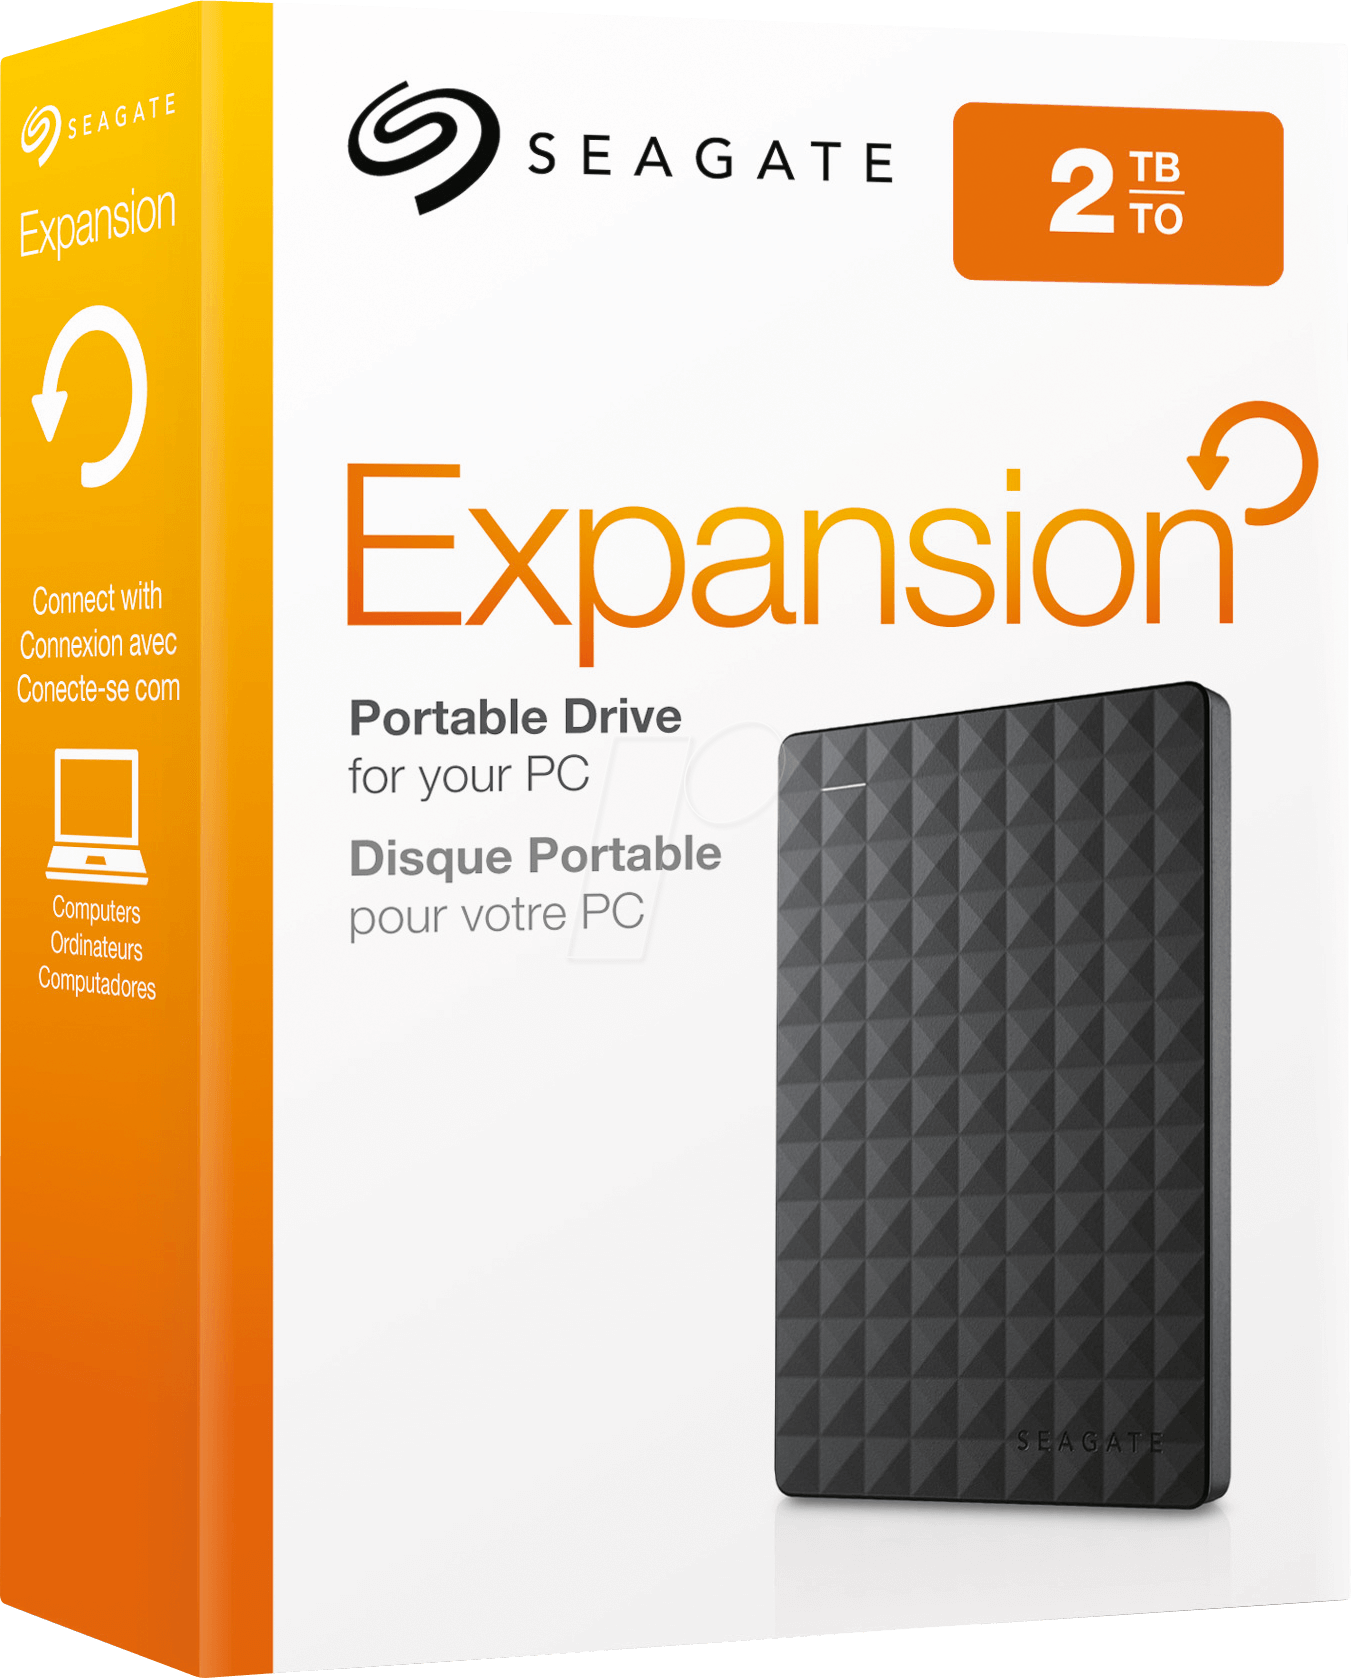 Seagate expansion portable hard drive